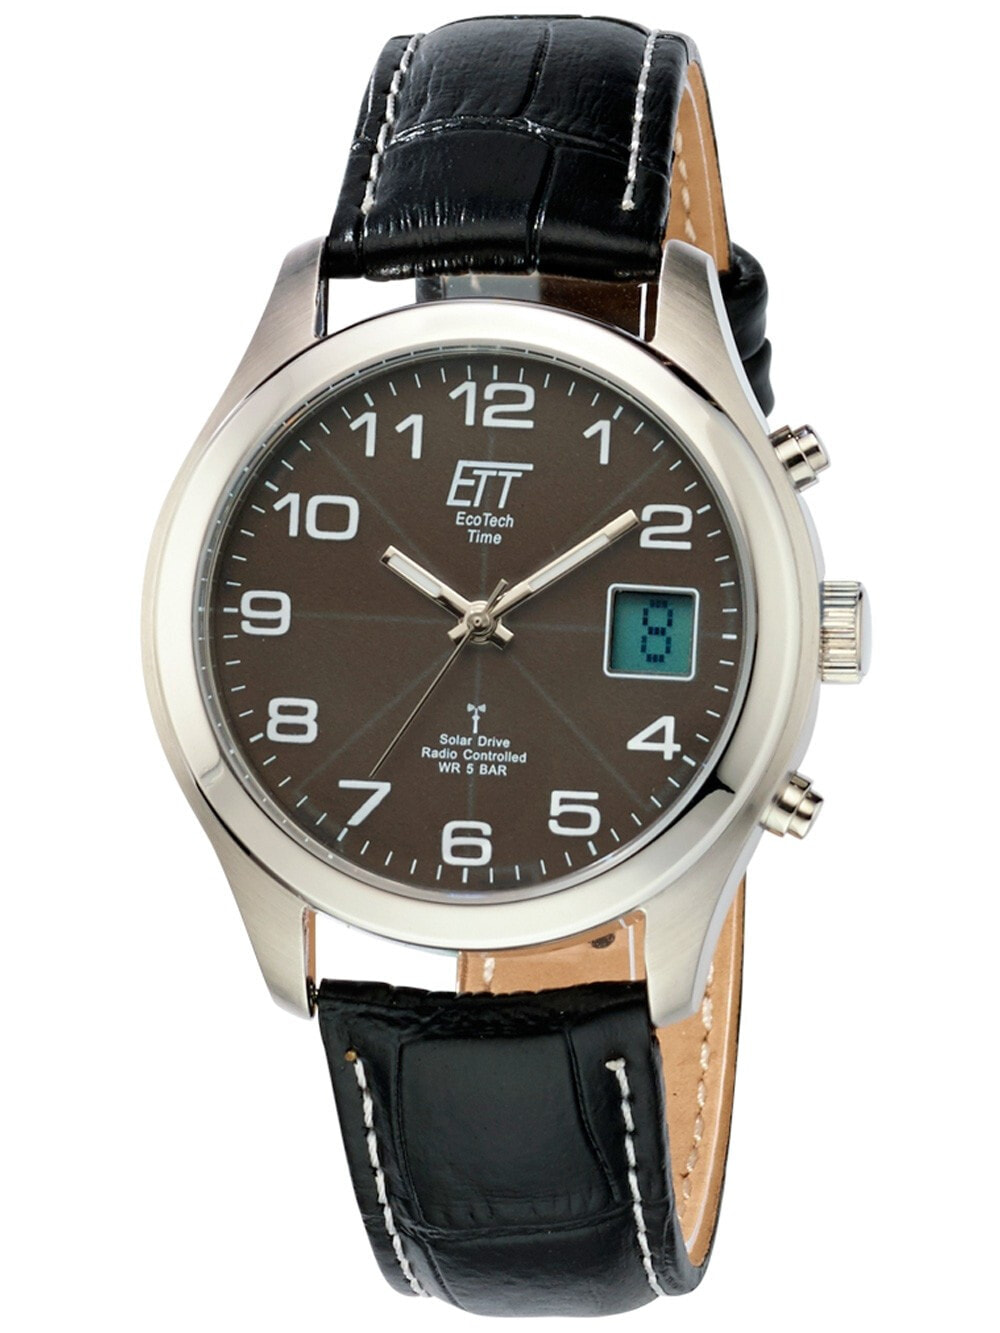 Мужские наручные часы с черным кожаным ремешком ETT EGS-11330-50L Solar Drive Radio Controlled Basic Mens 39mm 5ATM